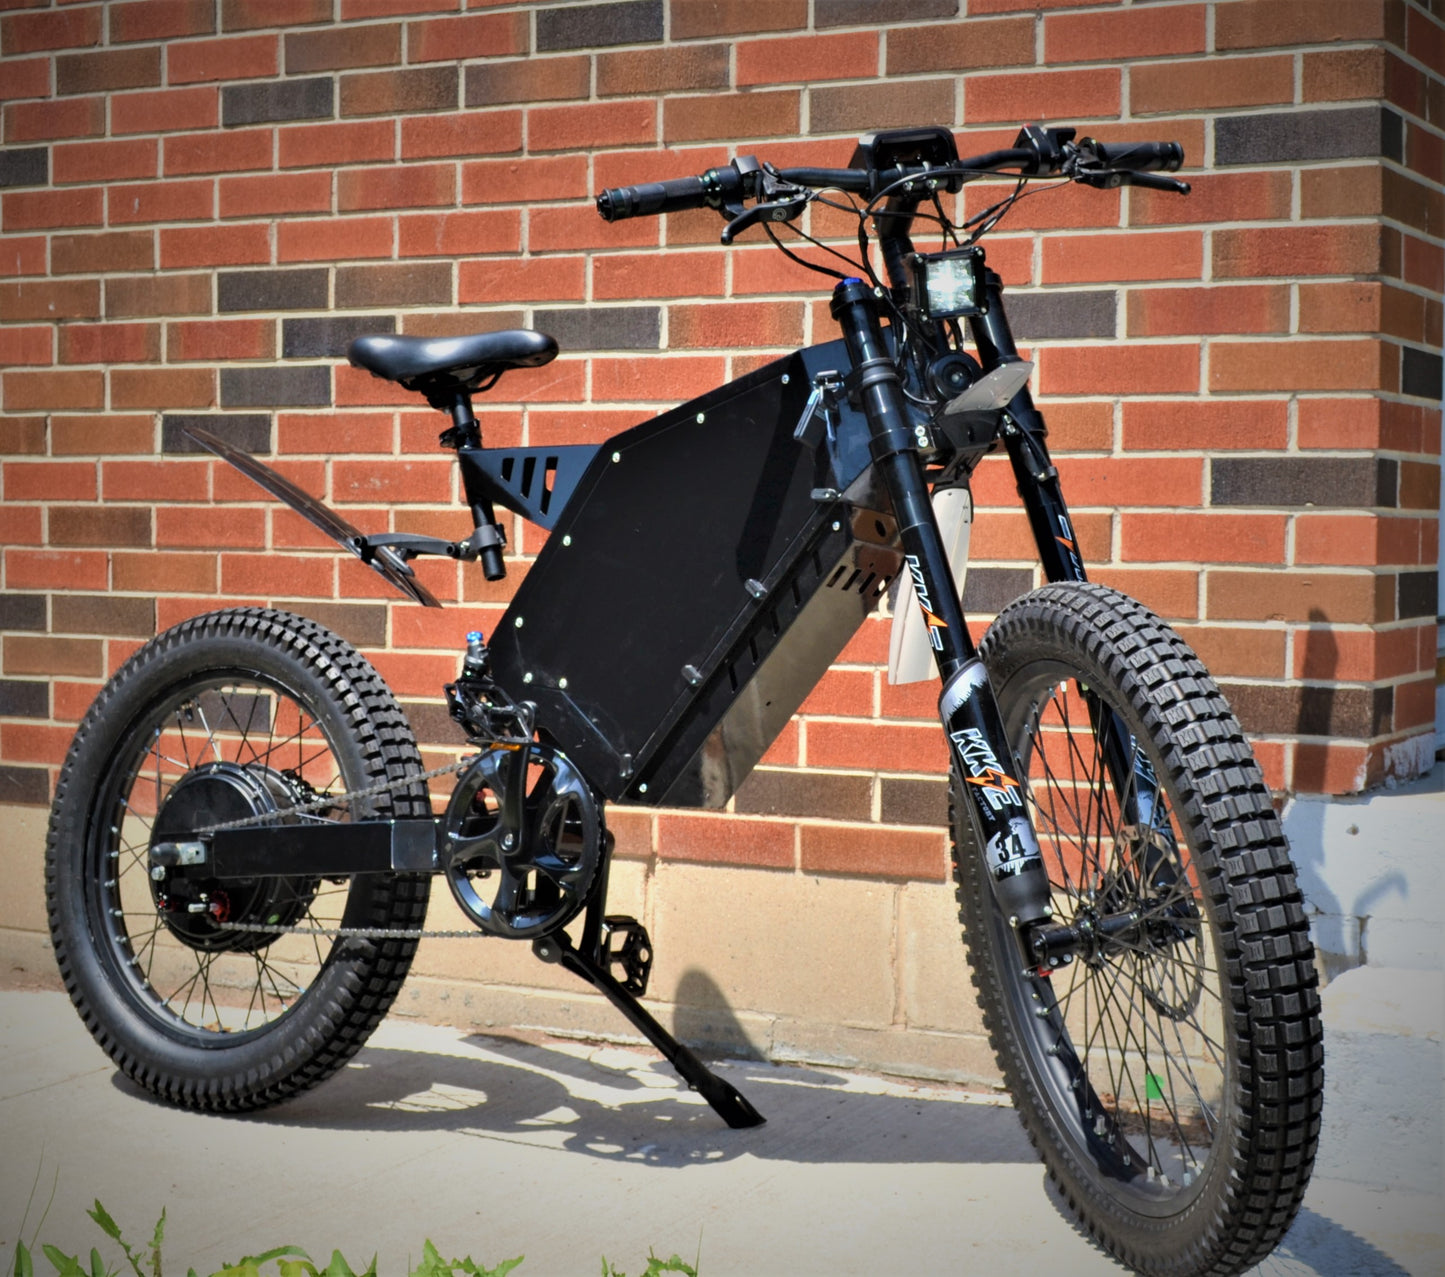 COMPLETE KIT - BYO (Build your Own) Stealth Enduro (Bomber) E-Bike